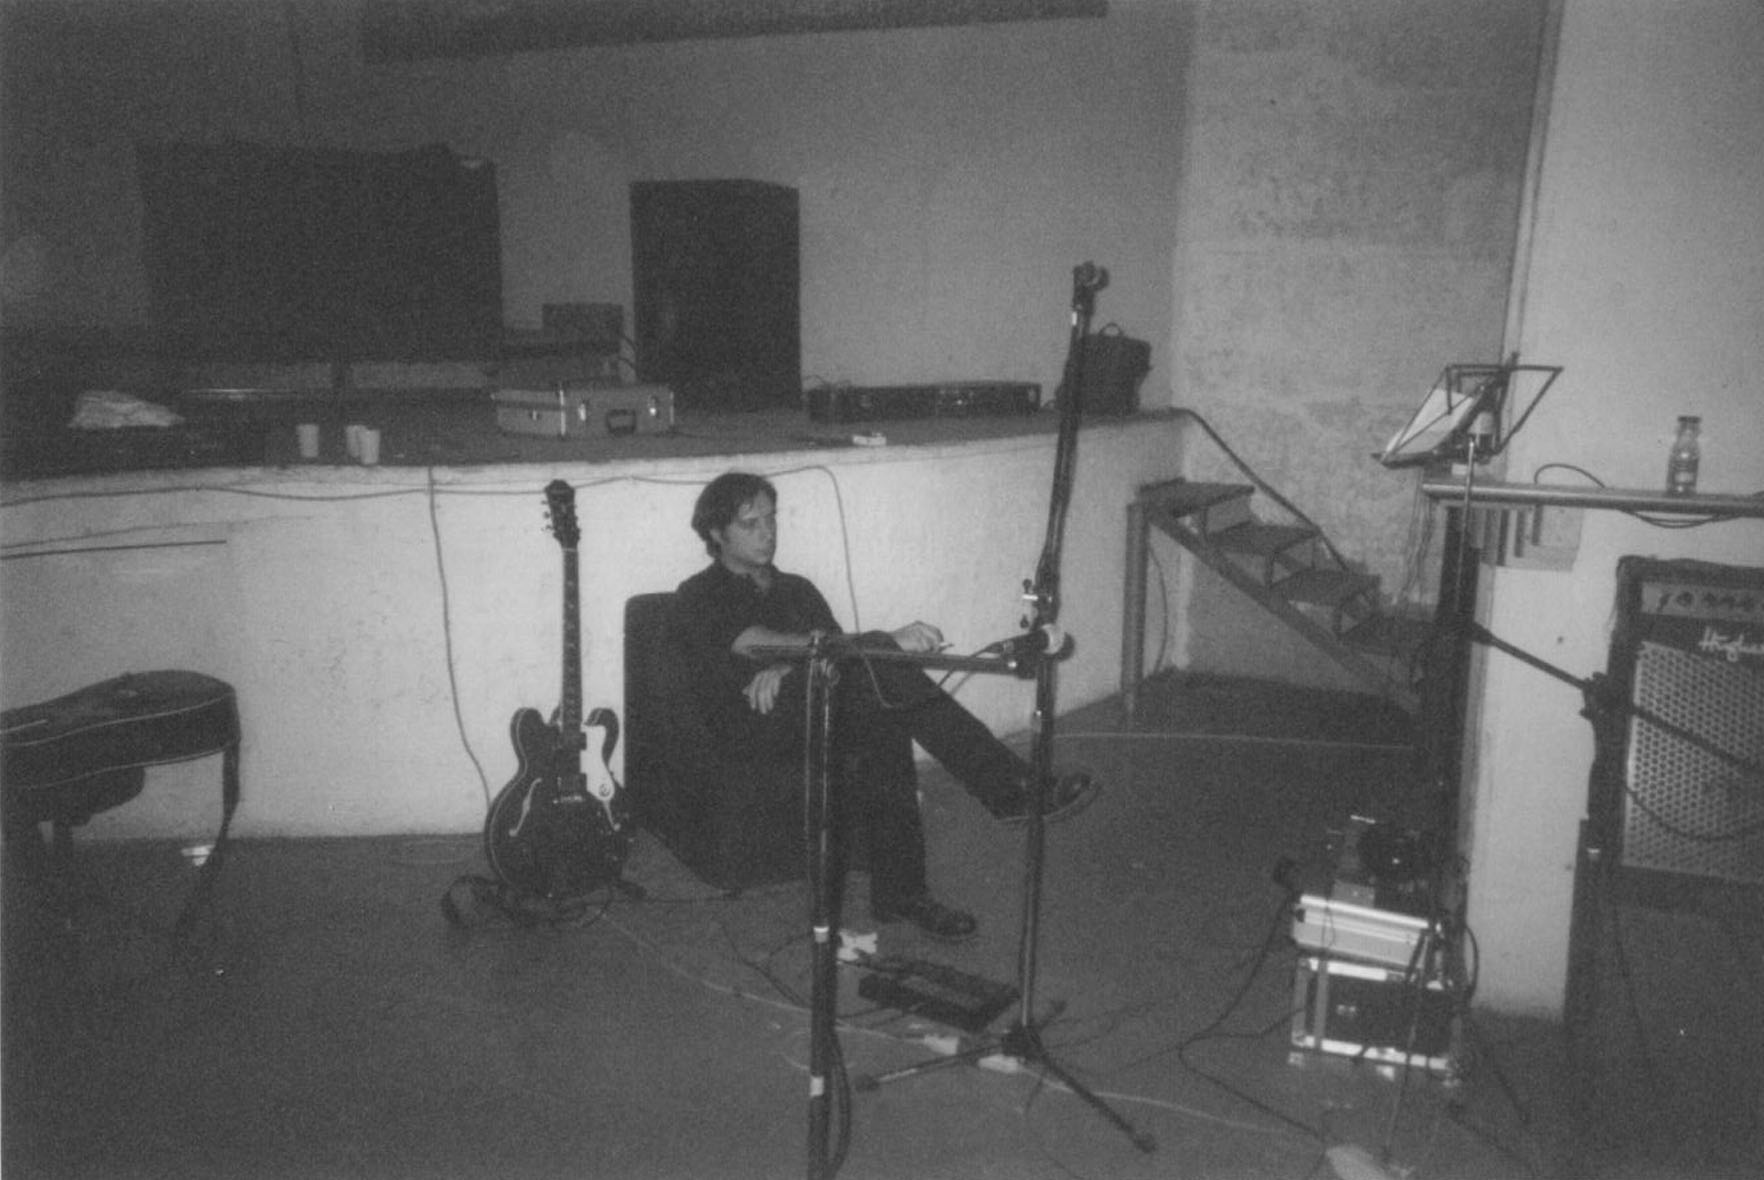 nexus recording (agosto 2005)